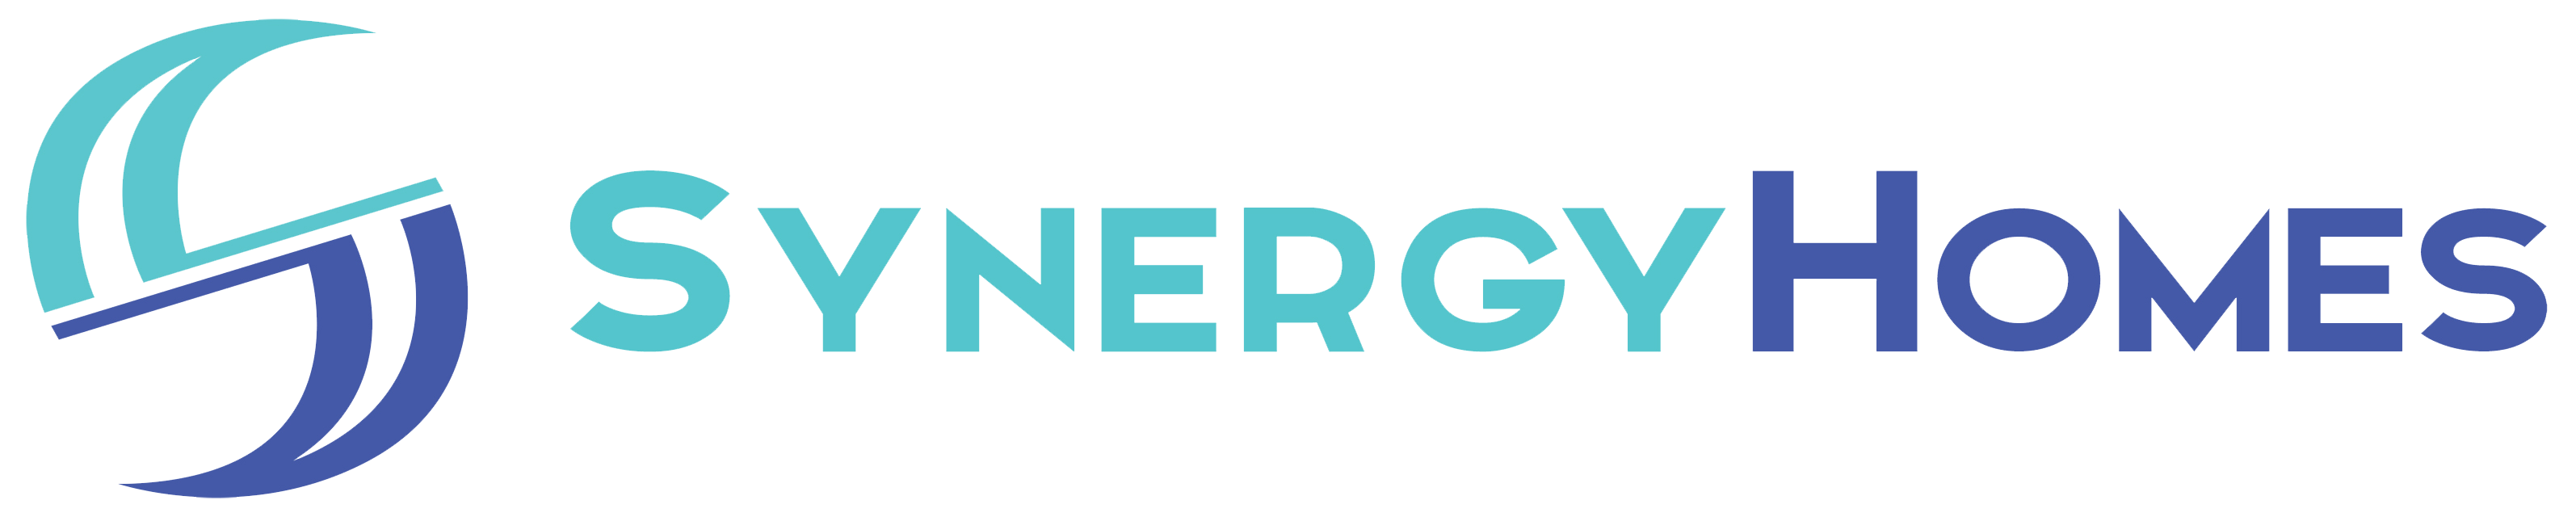 synergyHomes_logo